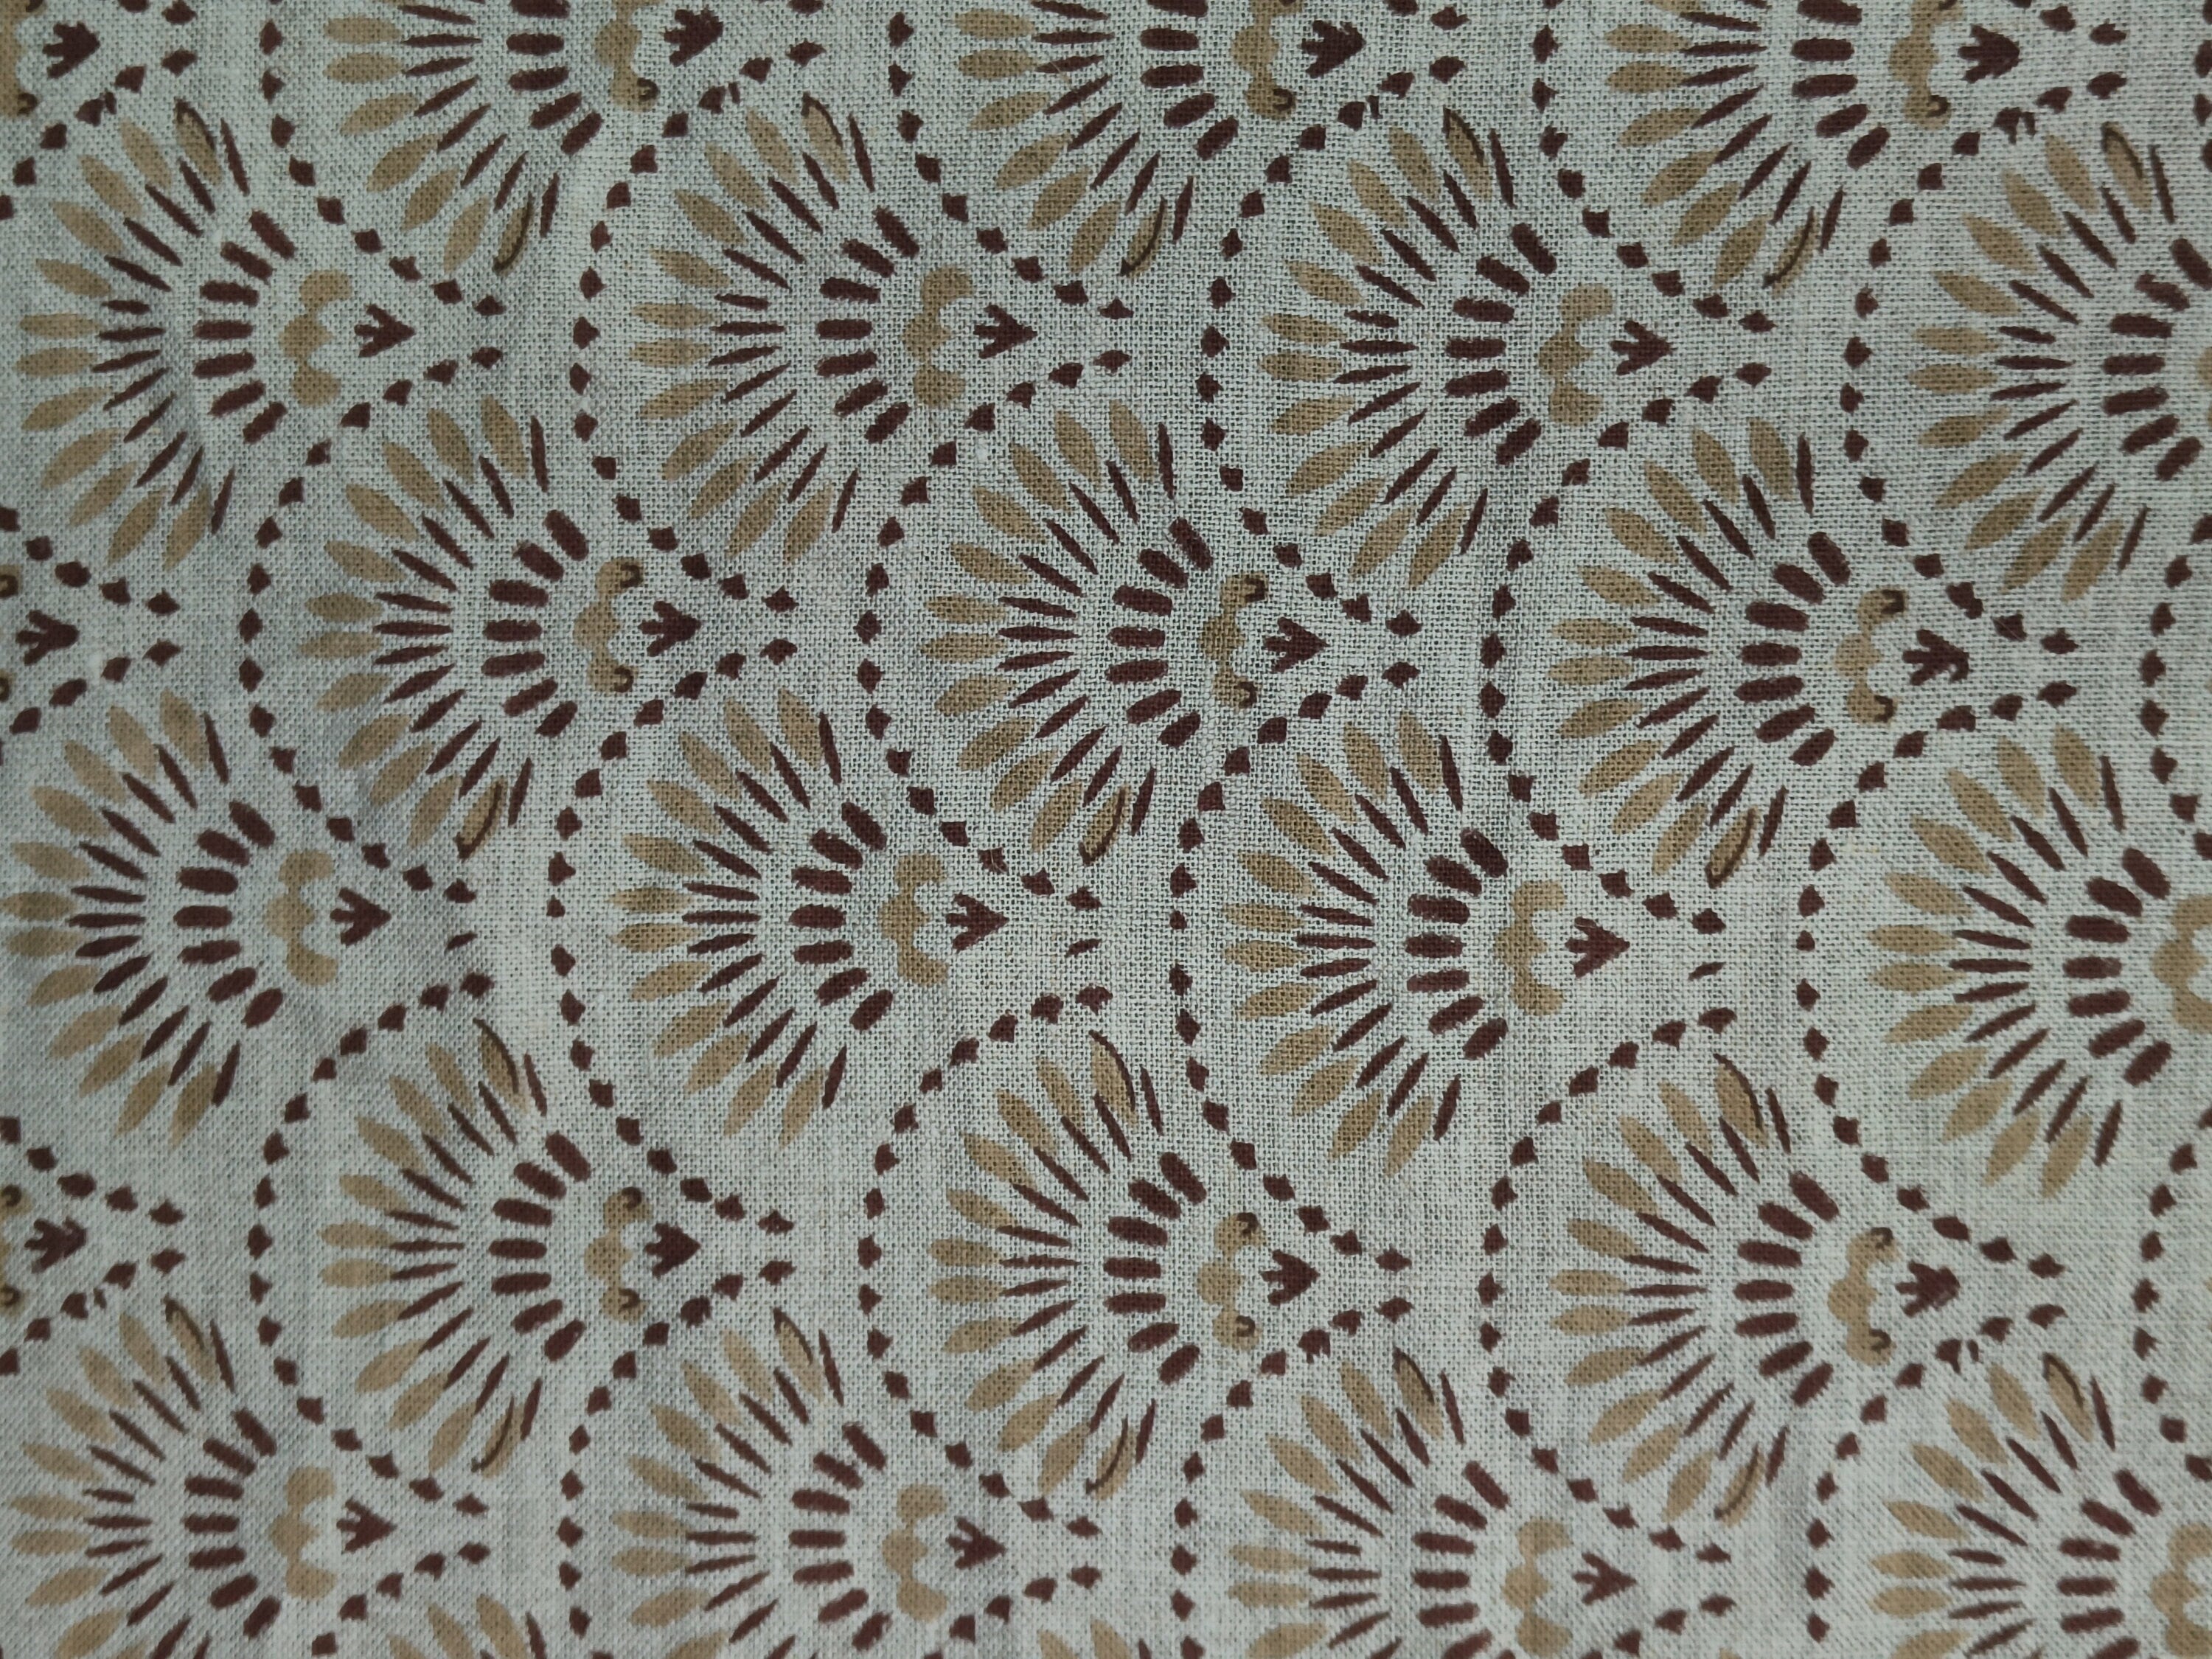 Block Print Linen Fabric, Shubharambh  Natural 100% Linen Block Print Fabric  Indian Flax Fabric By The Yard  Home Upholstery & Interior Pillow For Decors